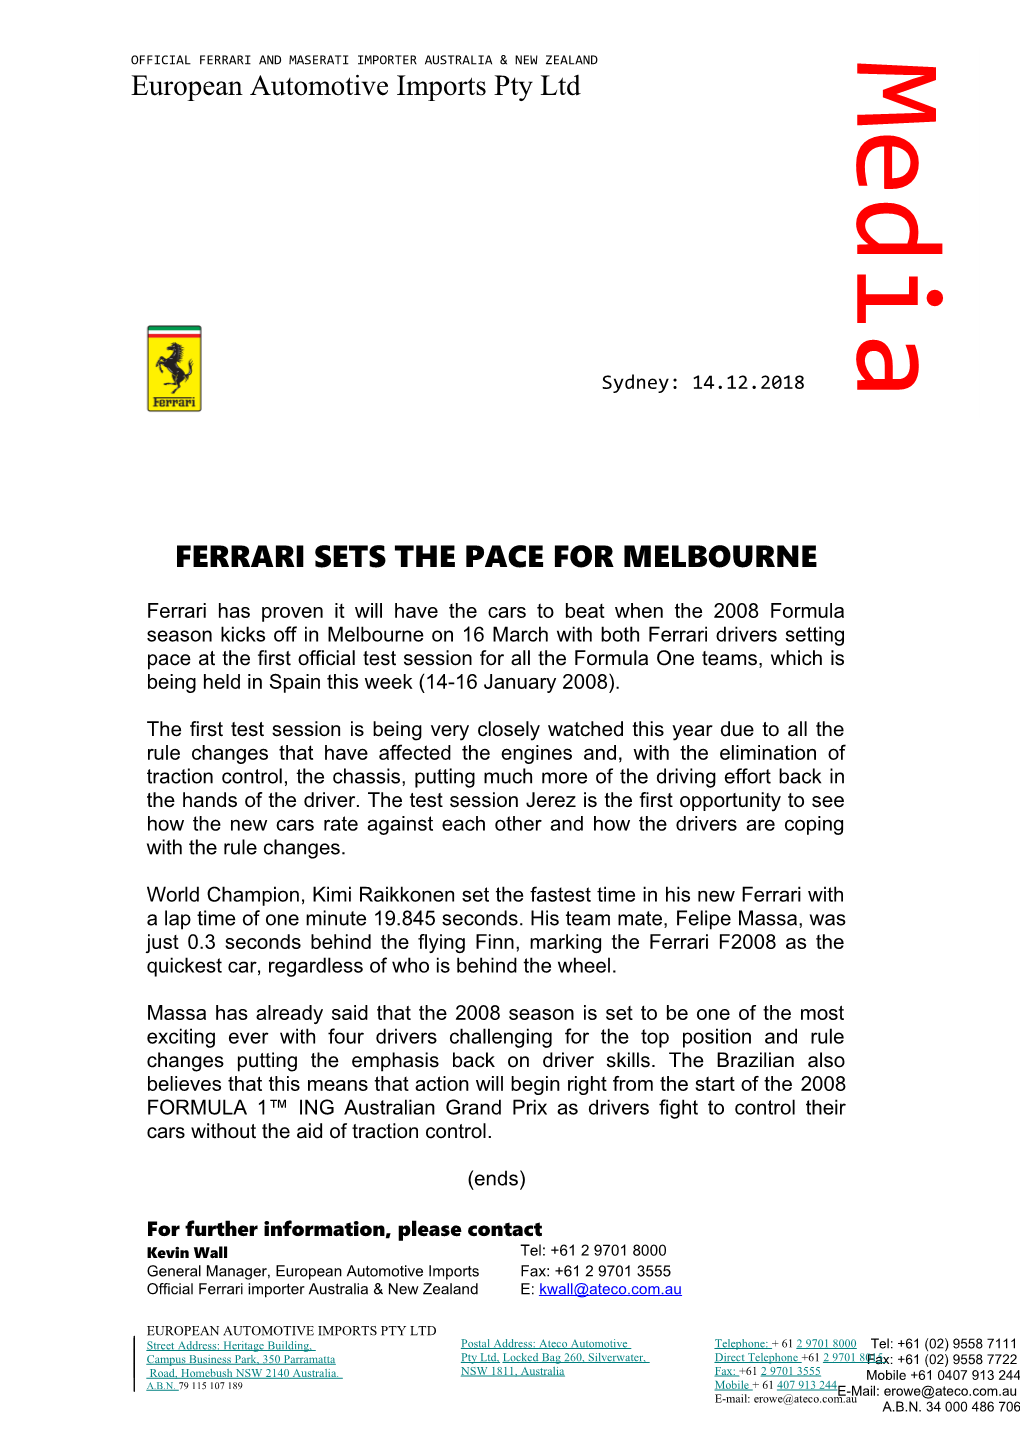 Ferrari Sets the Pace for Melbourne